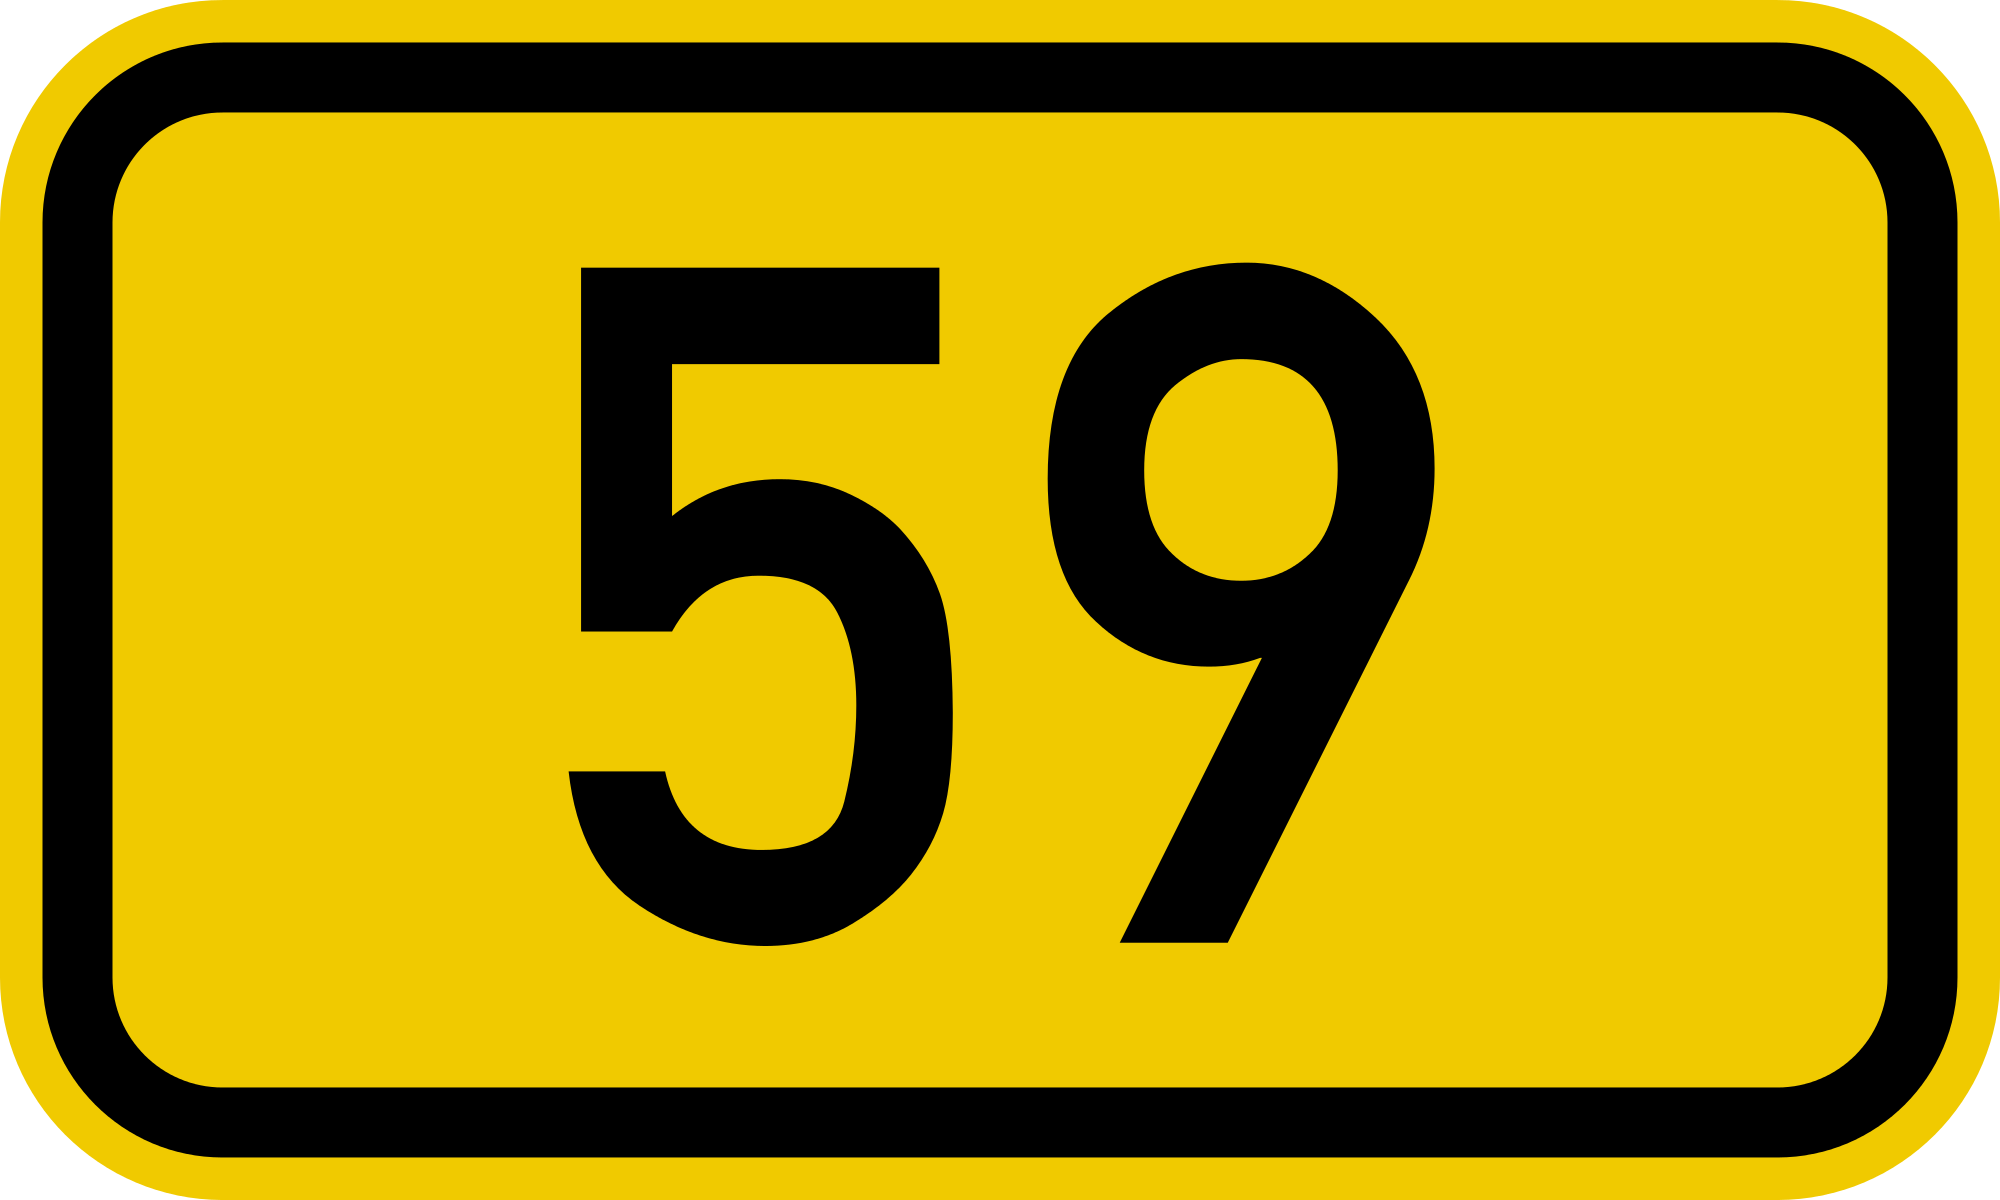 59-dr-odd